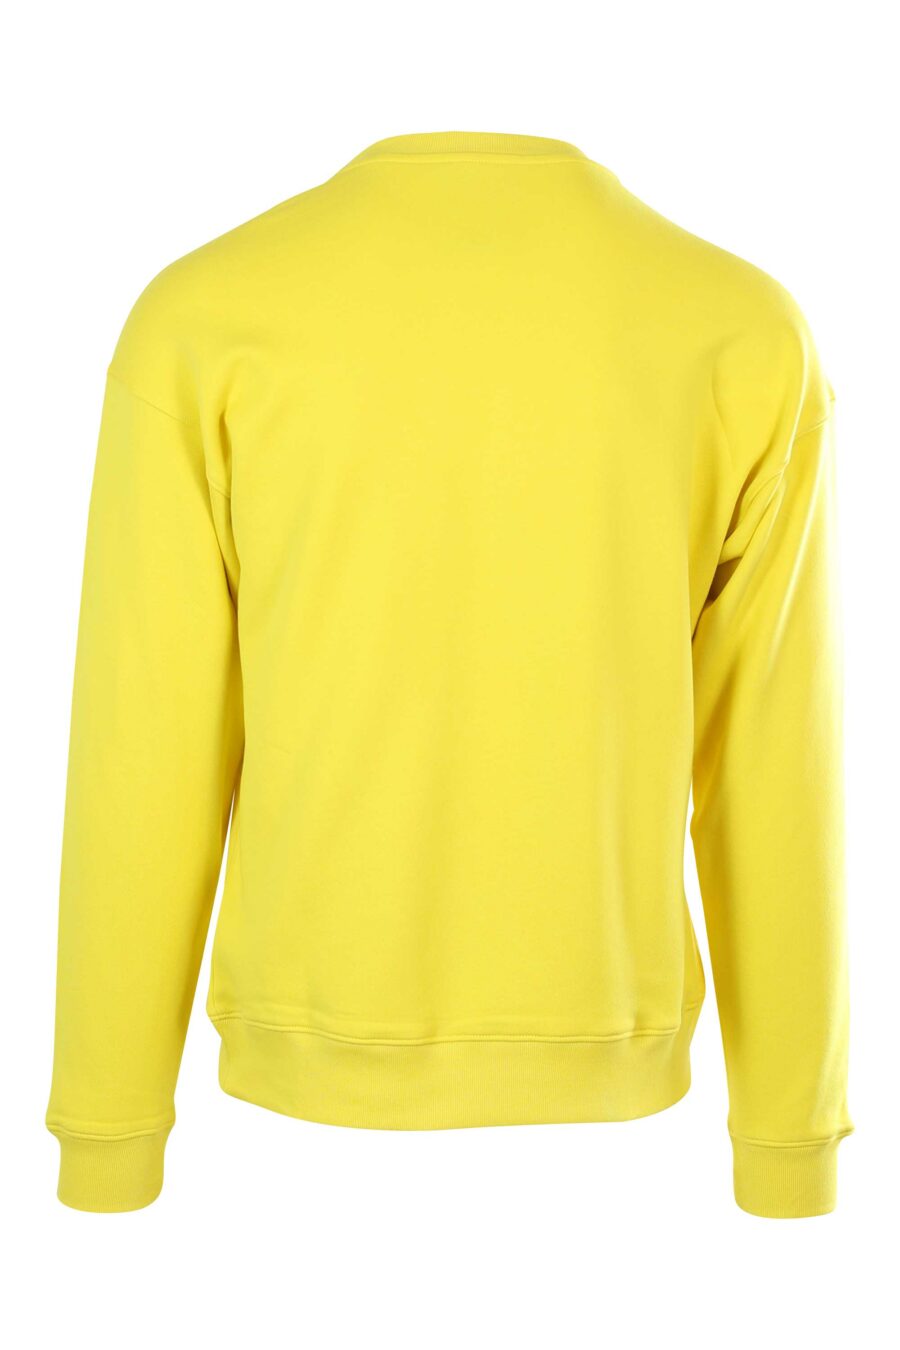 Yellow sweatshirt with black stripe logo - 667112846782 2